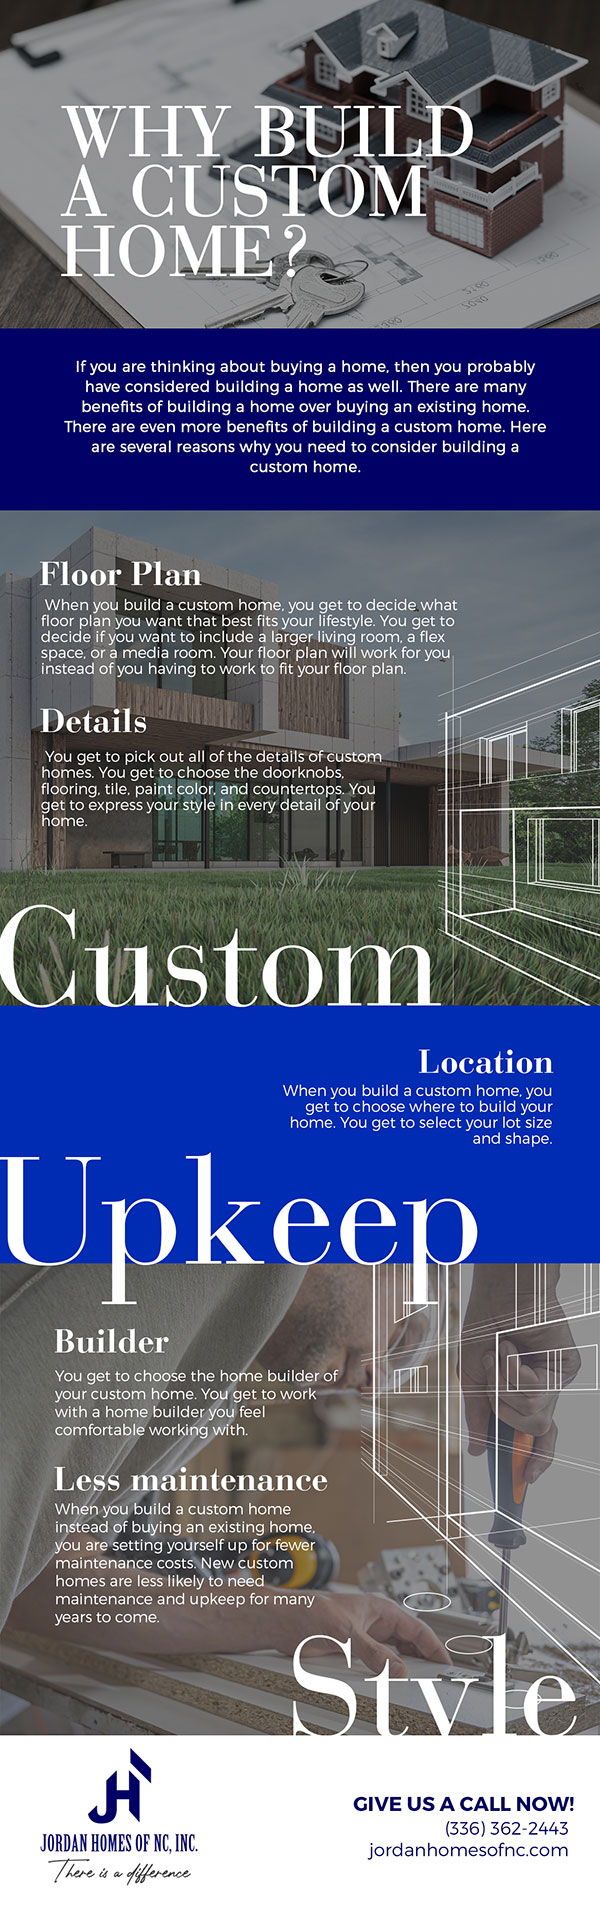 Why Build a Custom Home?